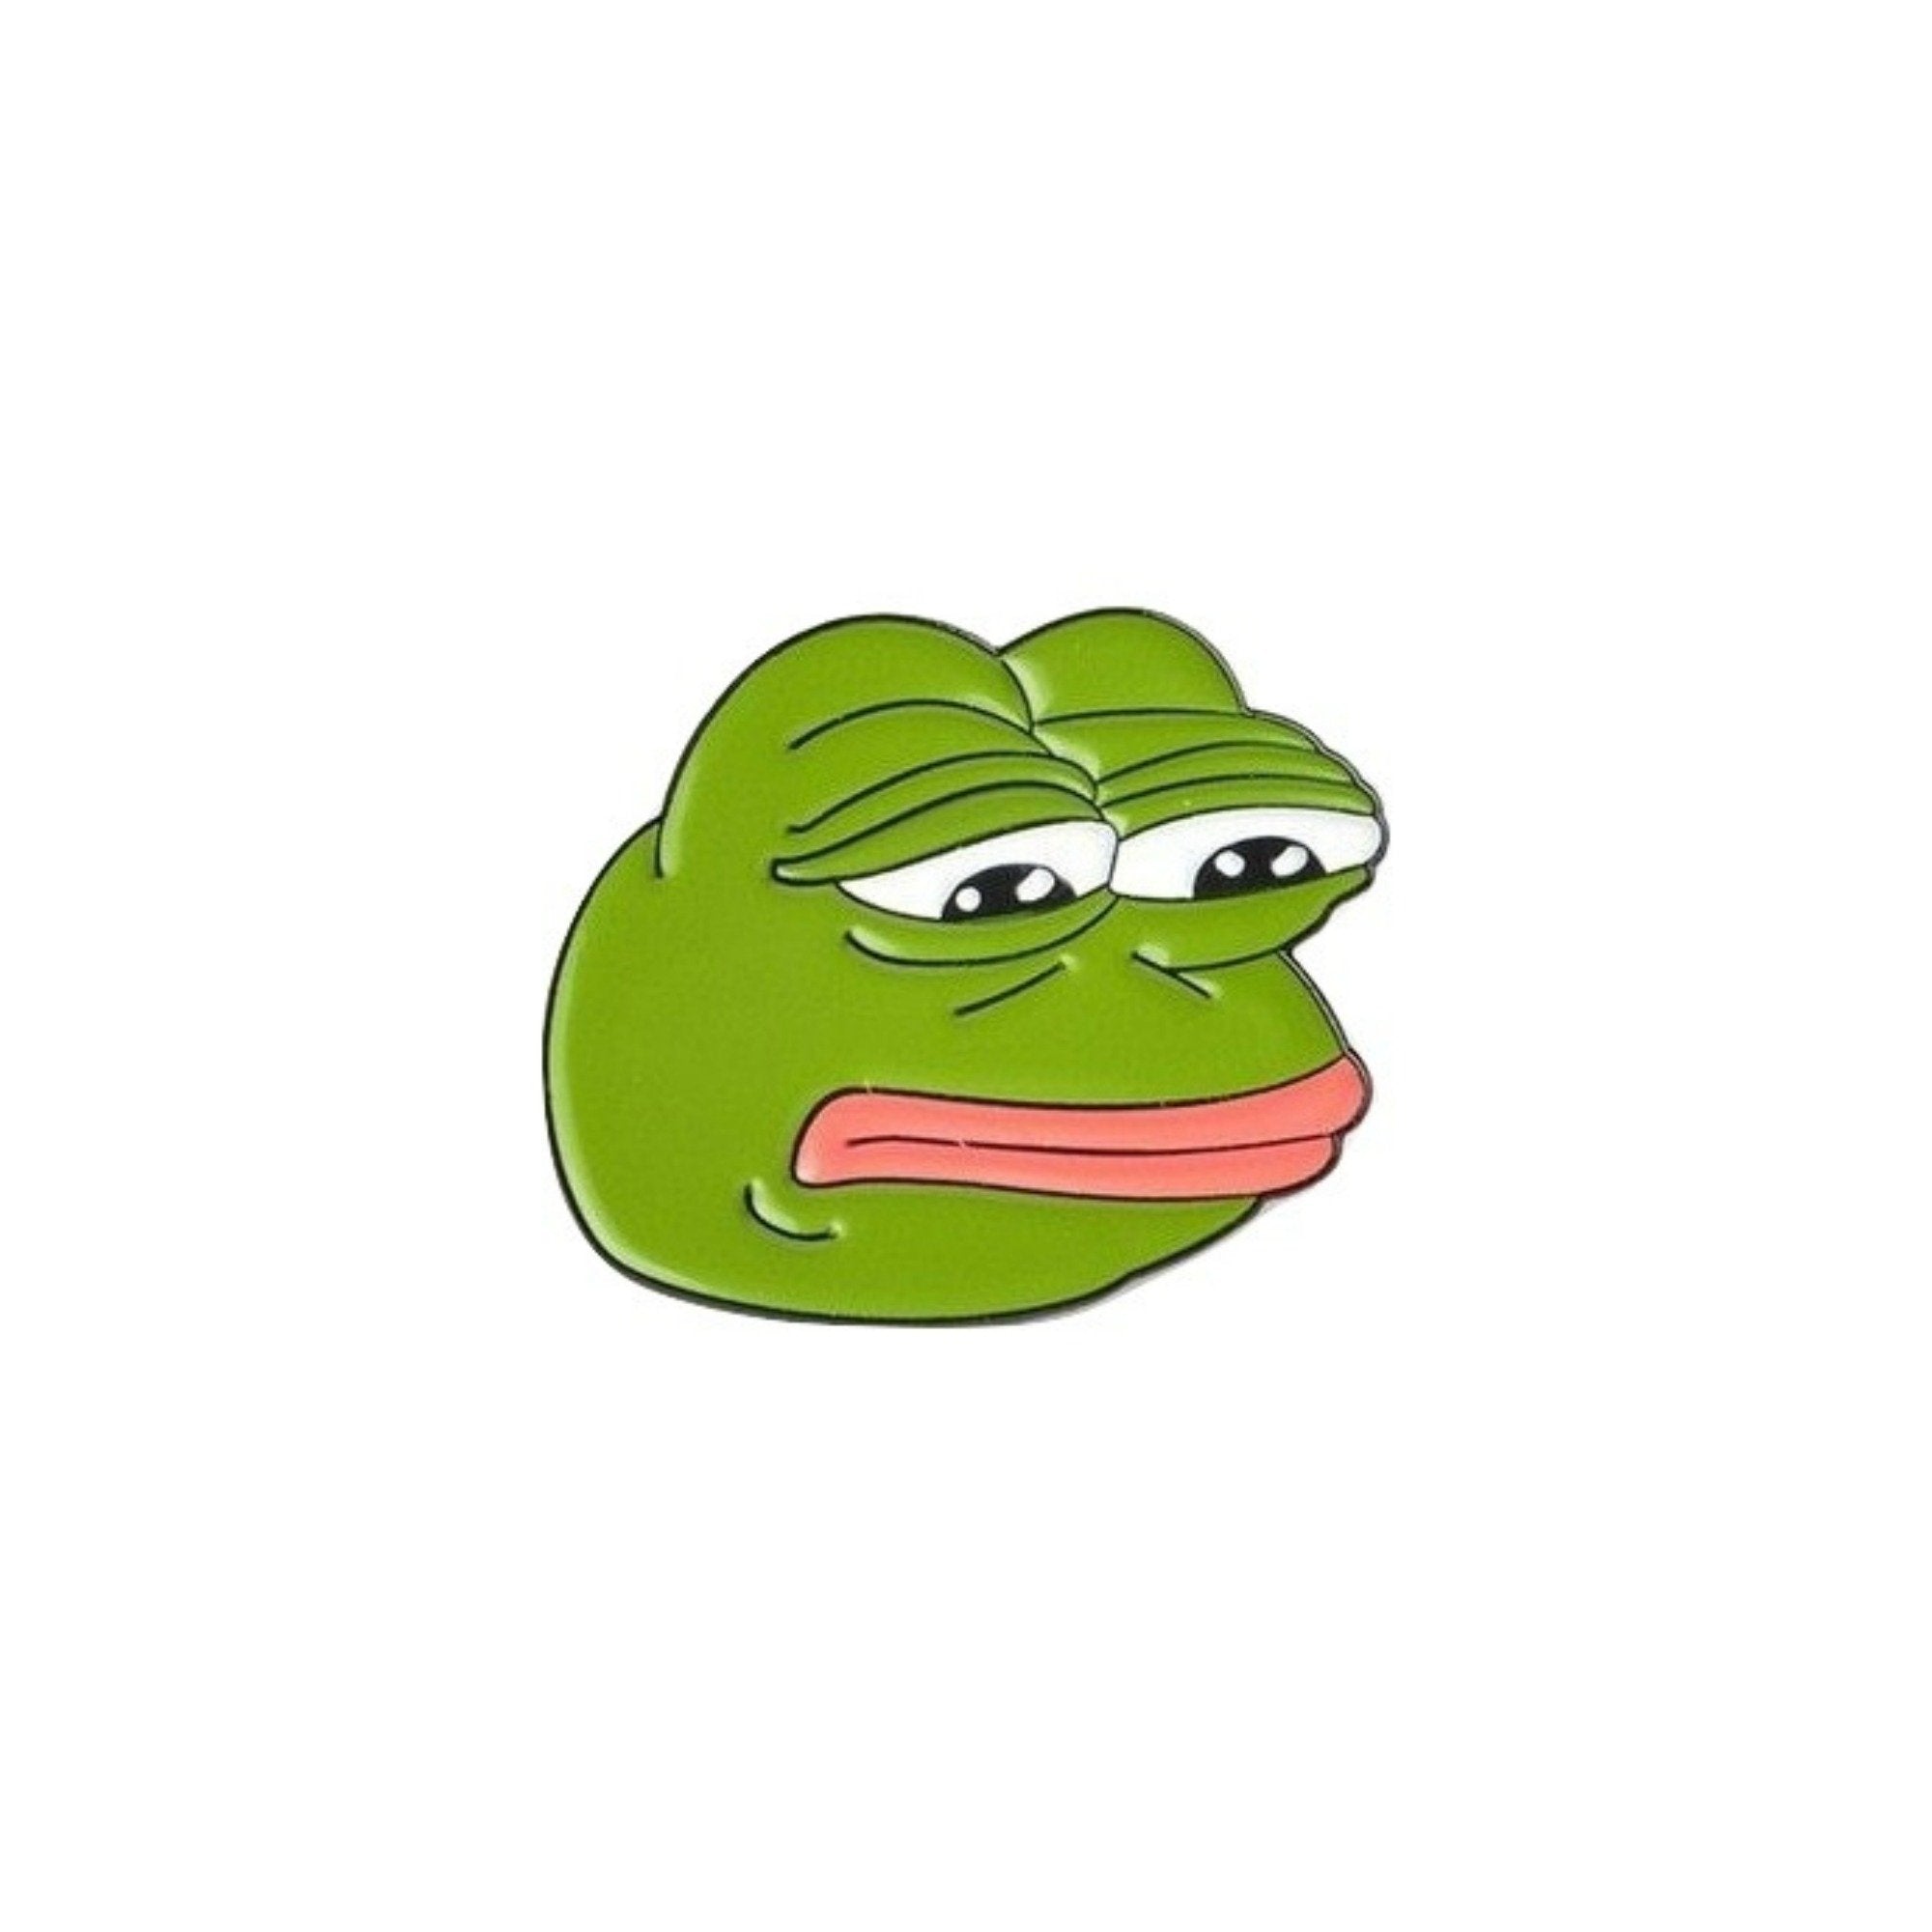 Sad Pepe The Frog Enamel Lapel Pin Badge/Brooch Meme Funny Gift BNWT ...